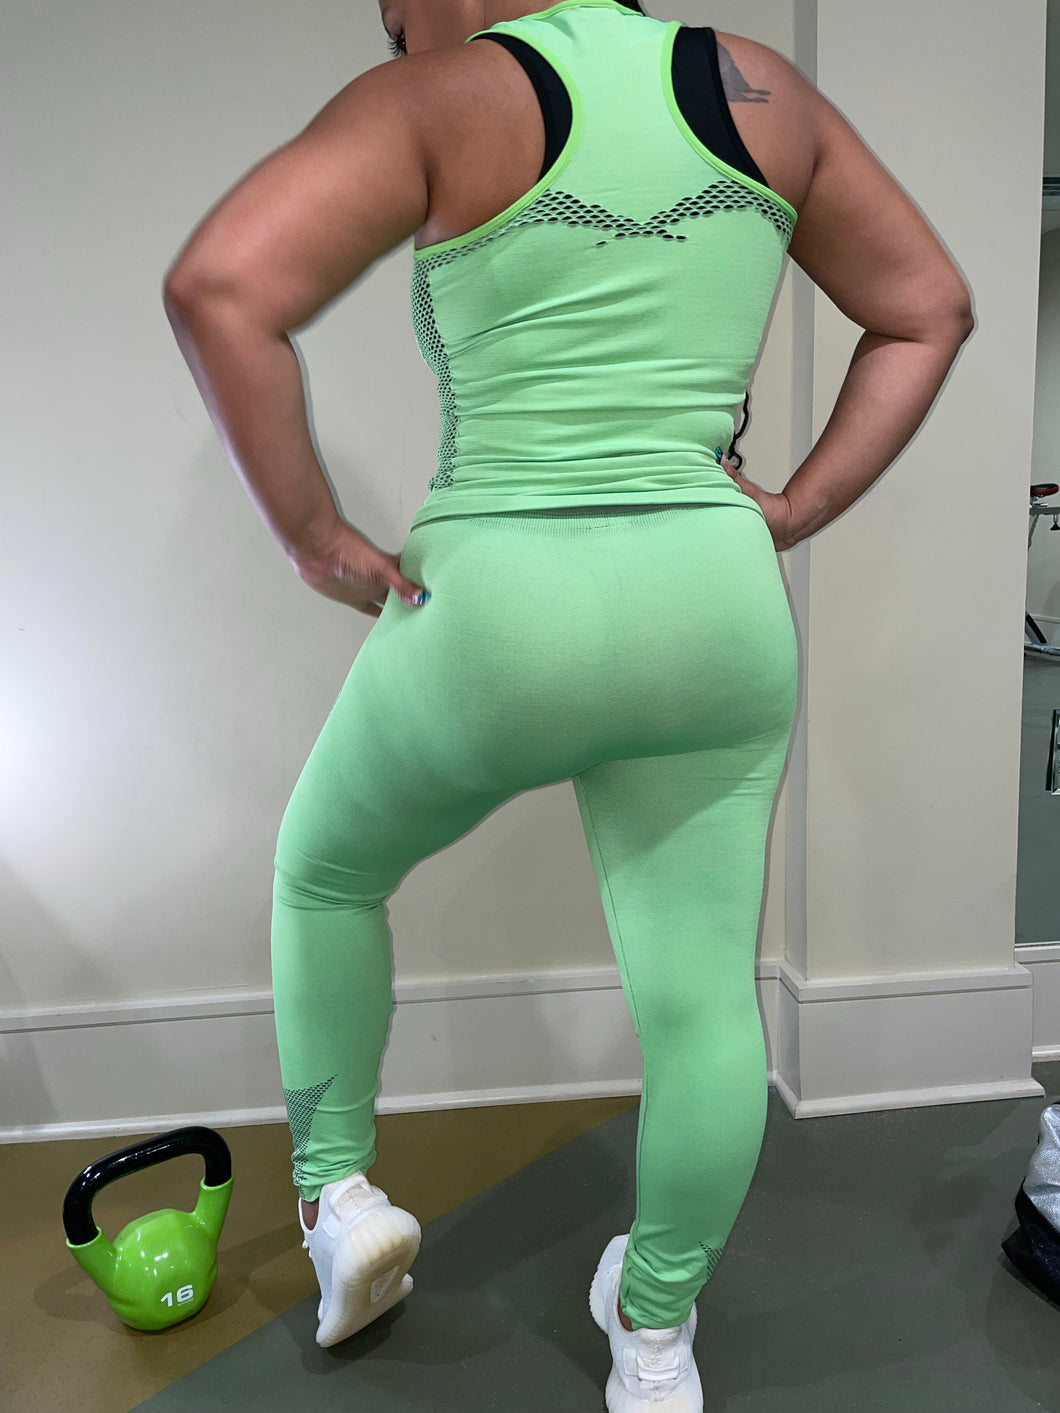 Woman wearing green yoga fitness set - matching sports bra and leggings.